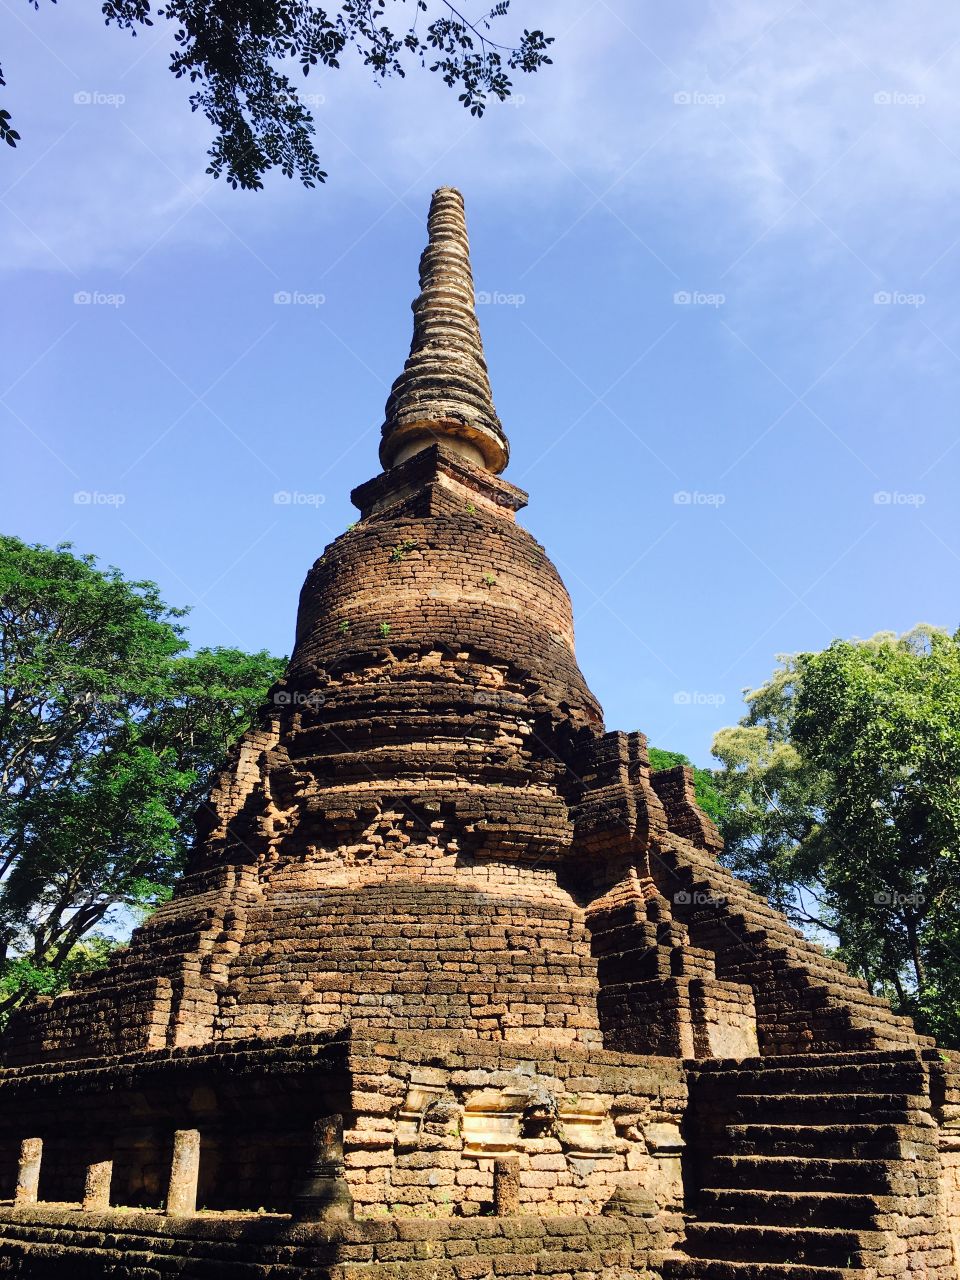 Wat nang phaya temple in Sukhothai, Thailand 